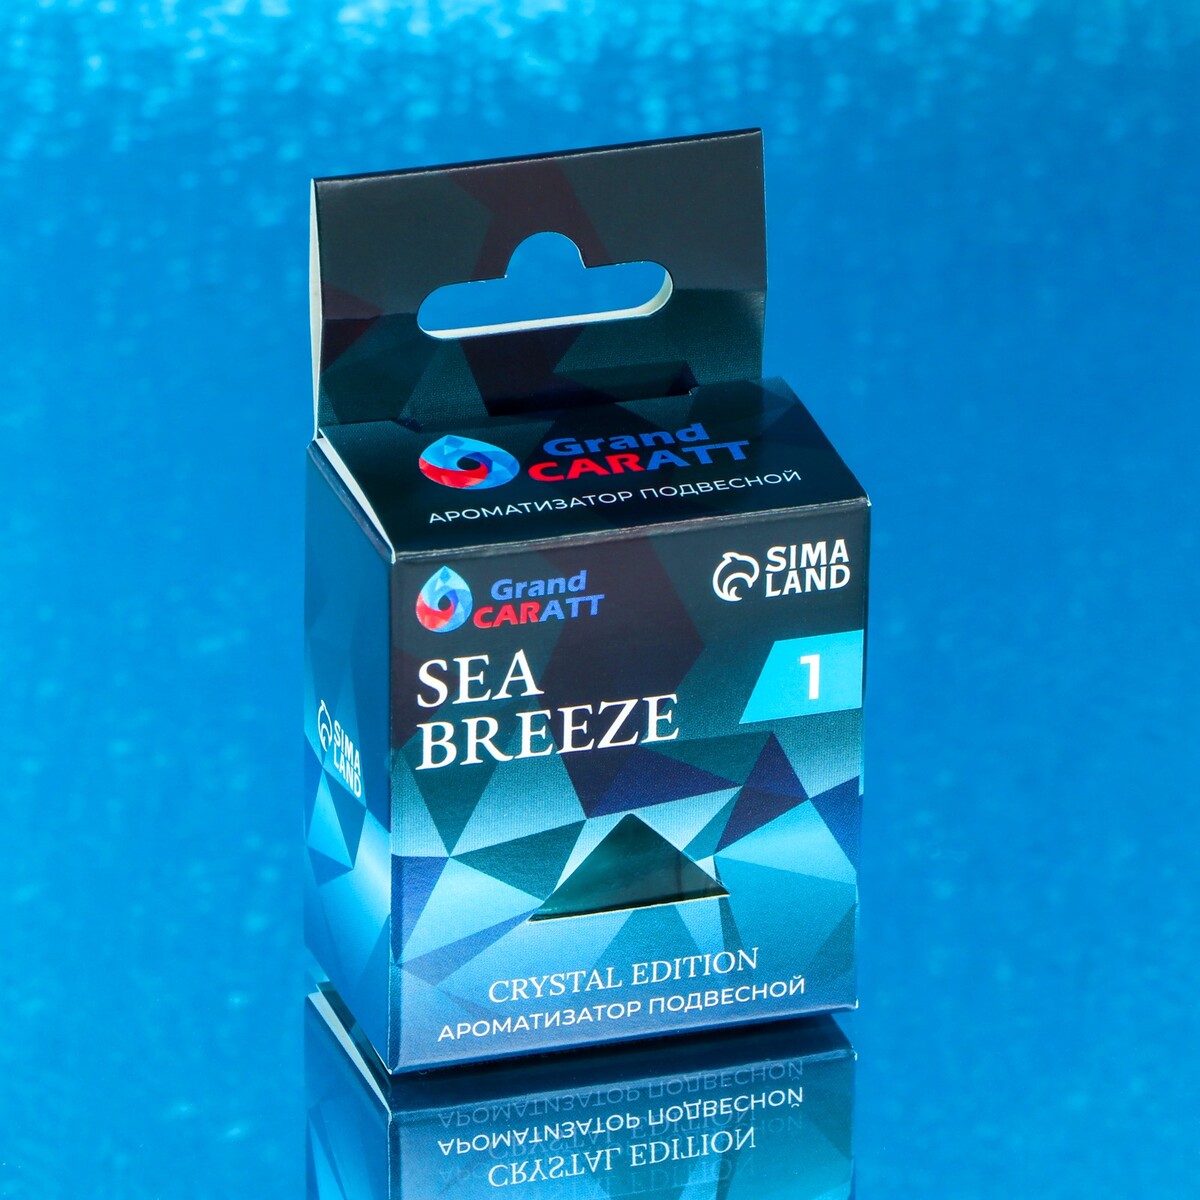 Ароматизатор подвесной grand caratt crystal edition, sea breeze, 7 мл Grand Caratt